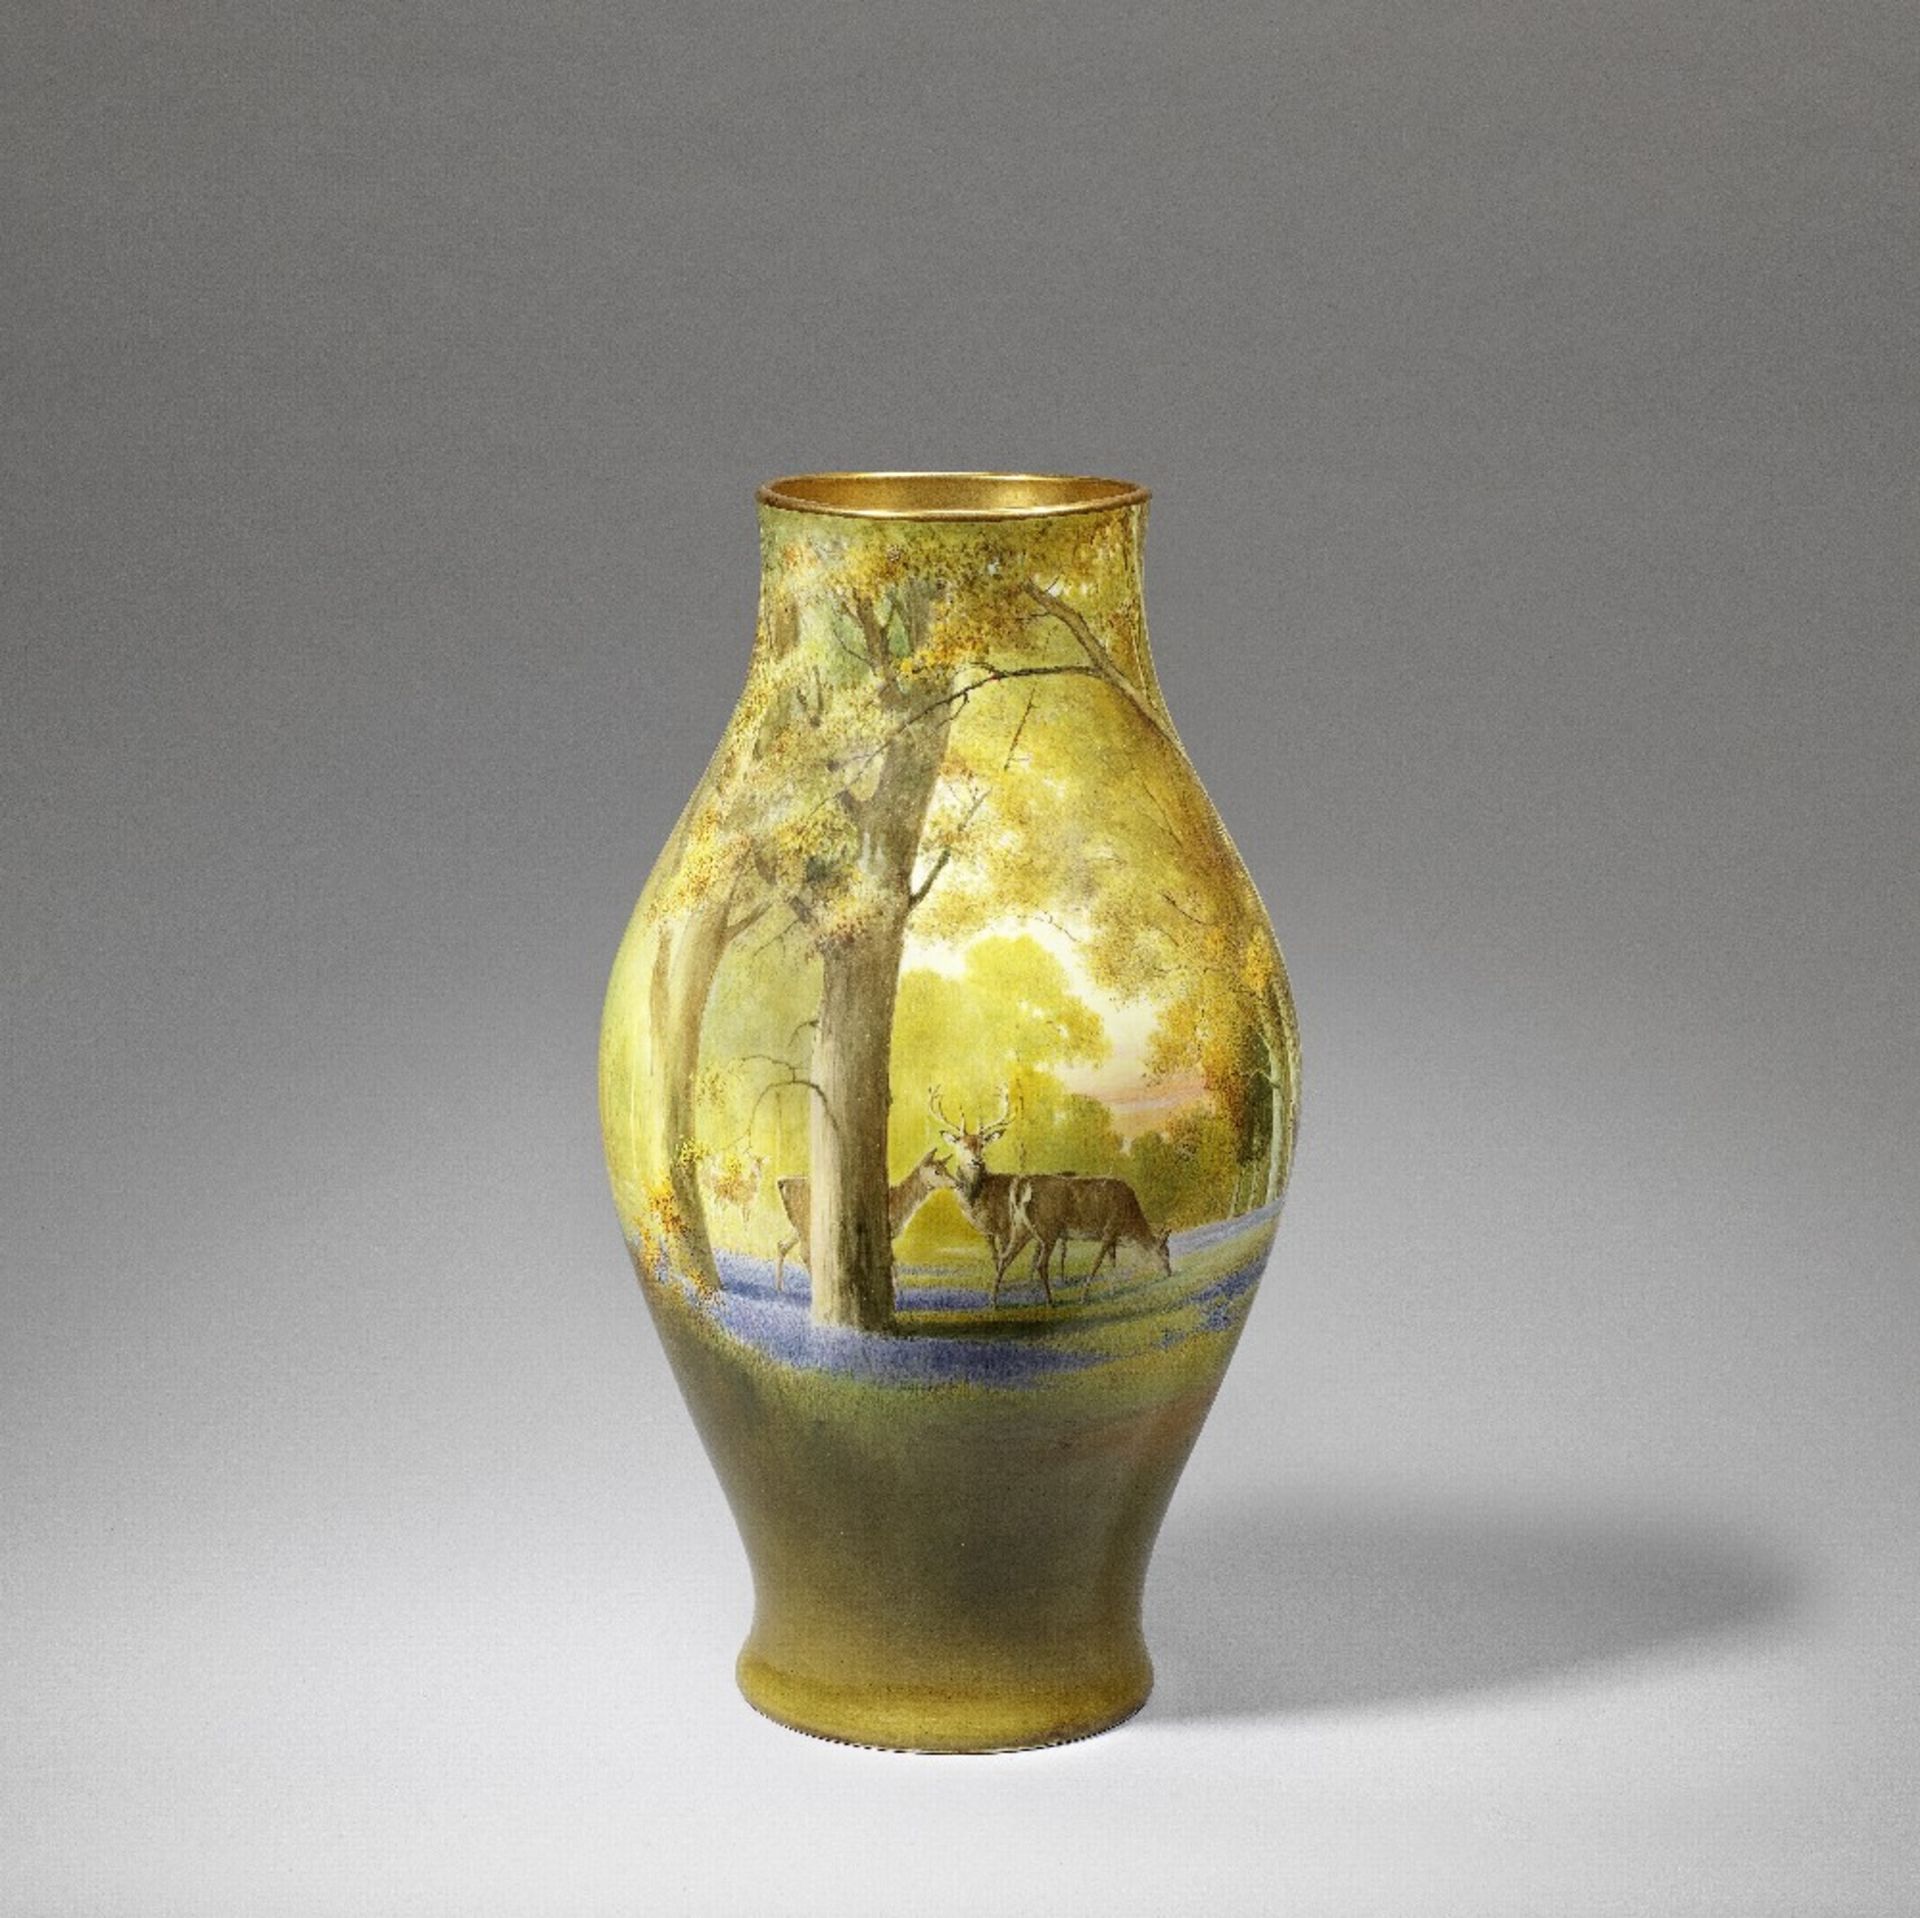 Arthur Eaton for Royal Doulton Large vase, model no. 1217, circa 1910